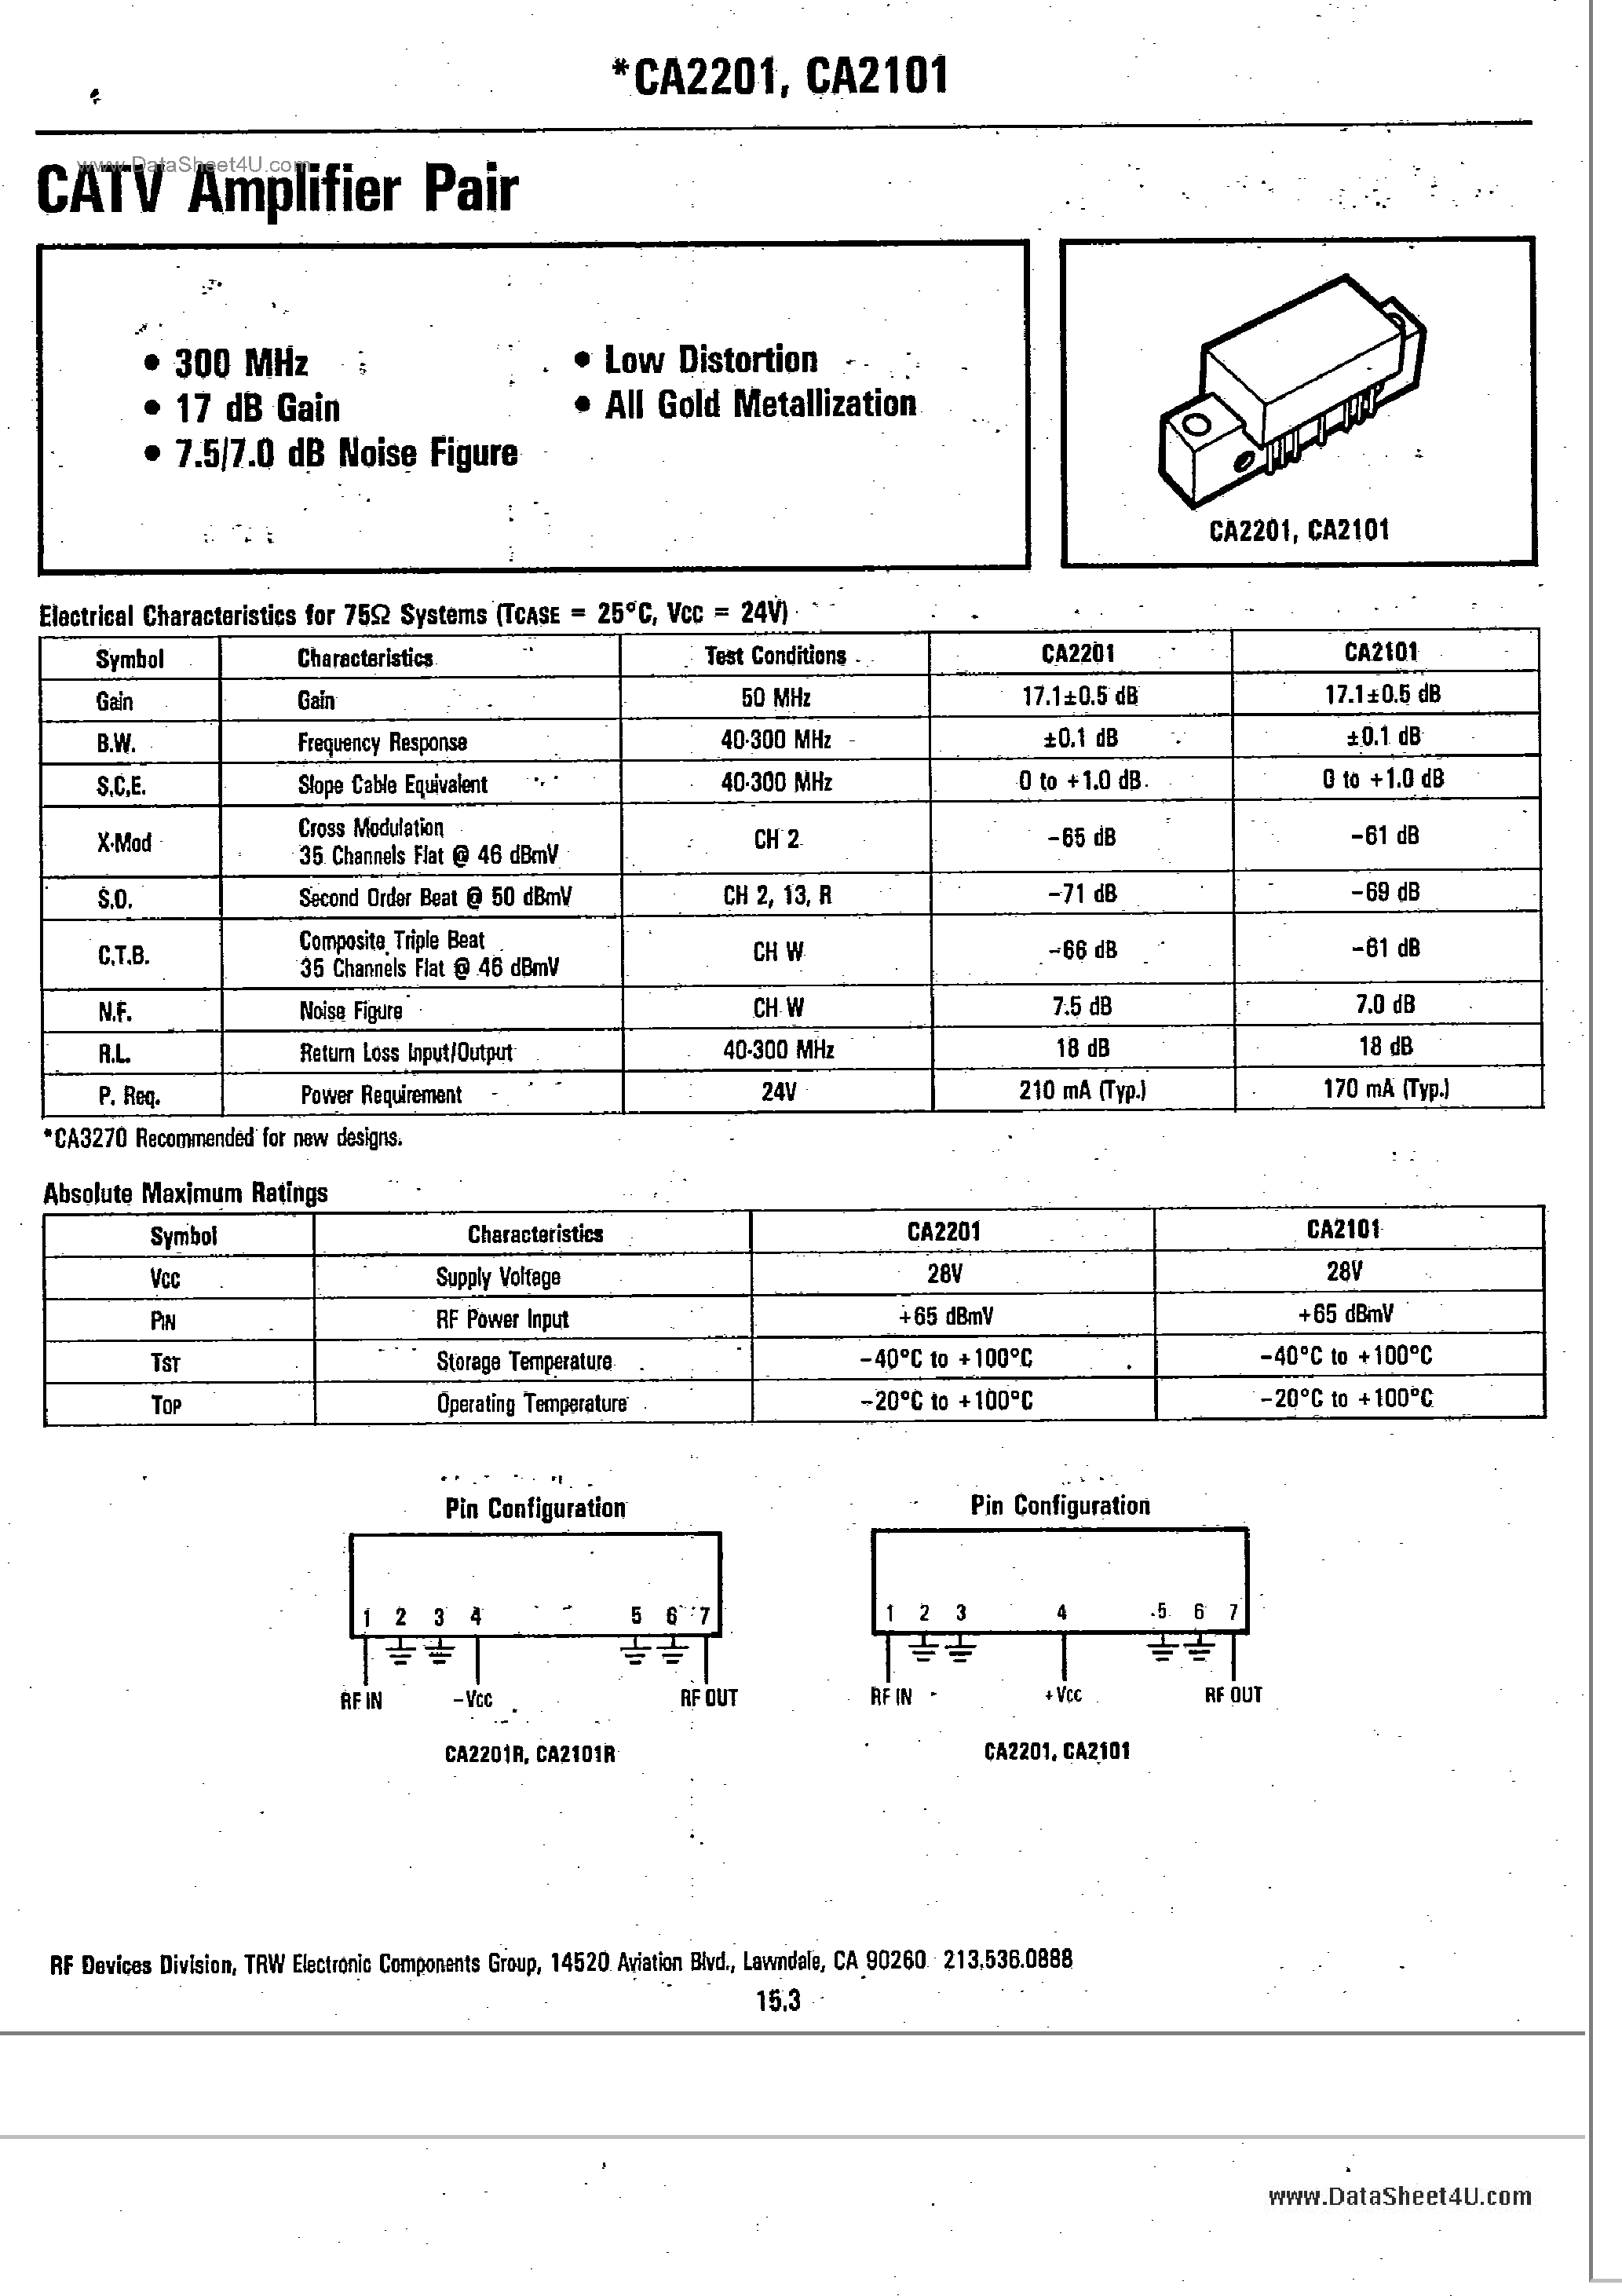 Datasheet CA2101 - (CA2101 / CA2201) CATV Amplifier Pair page 1